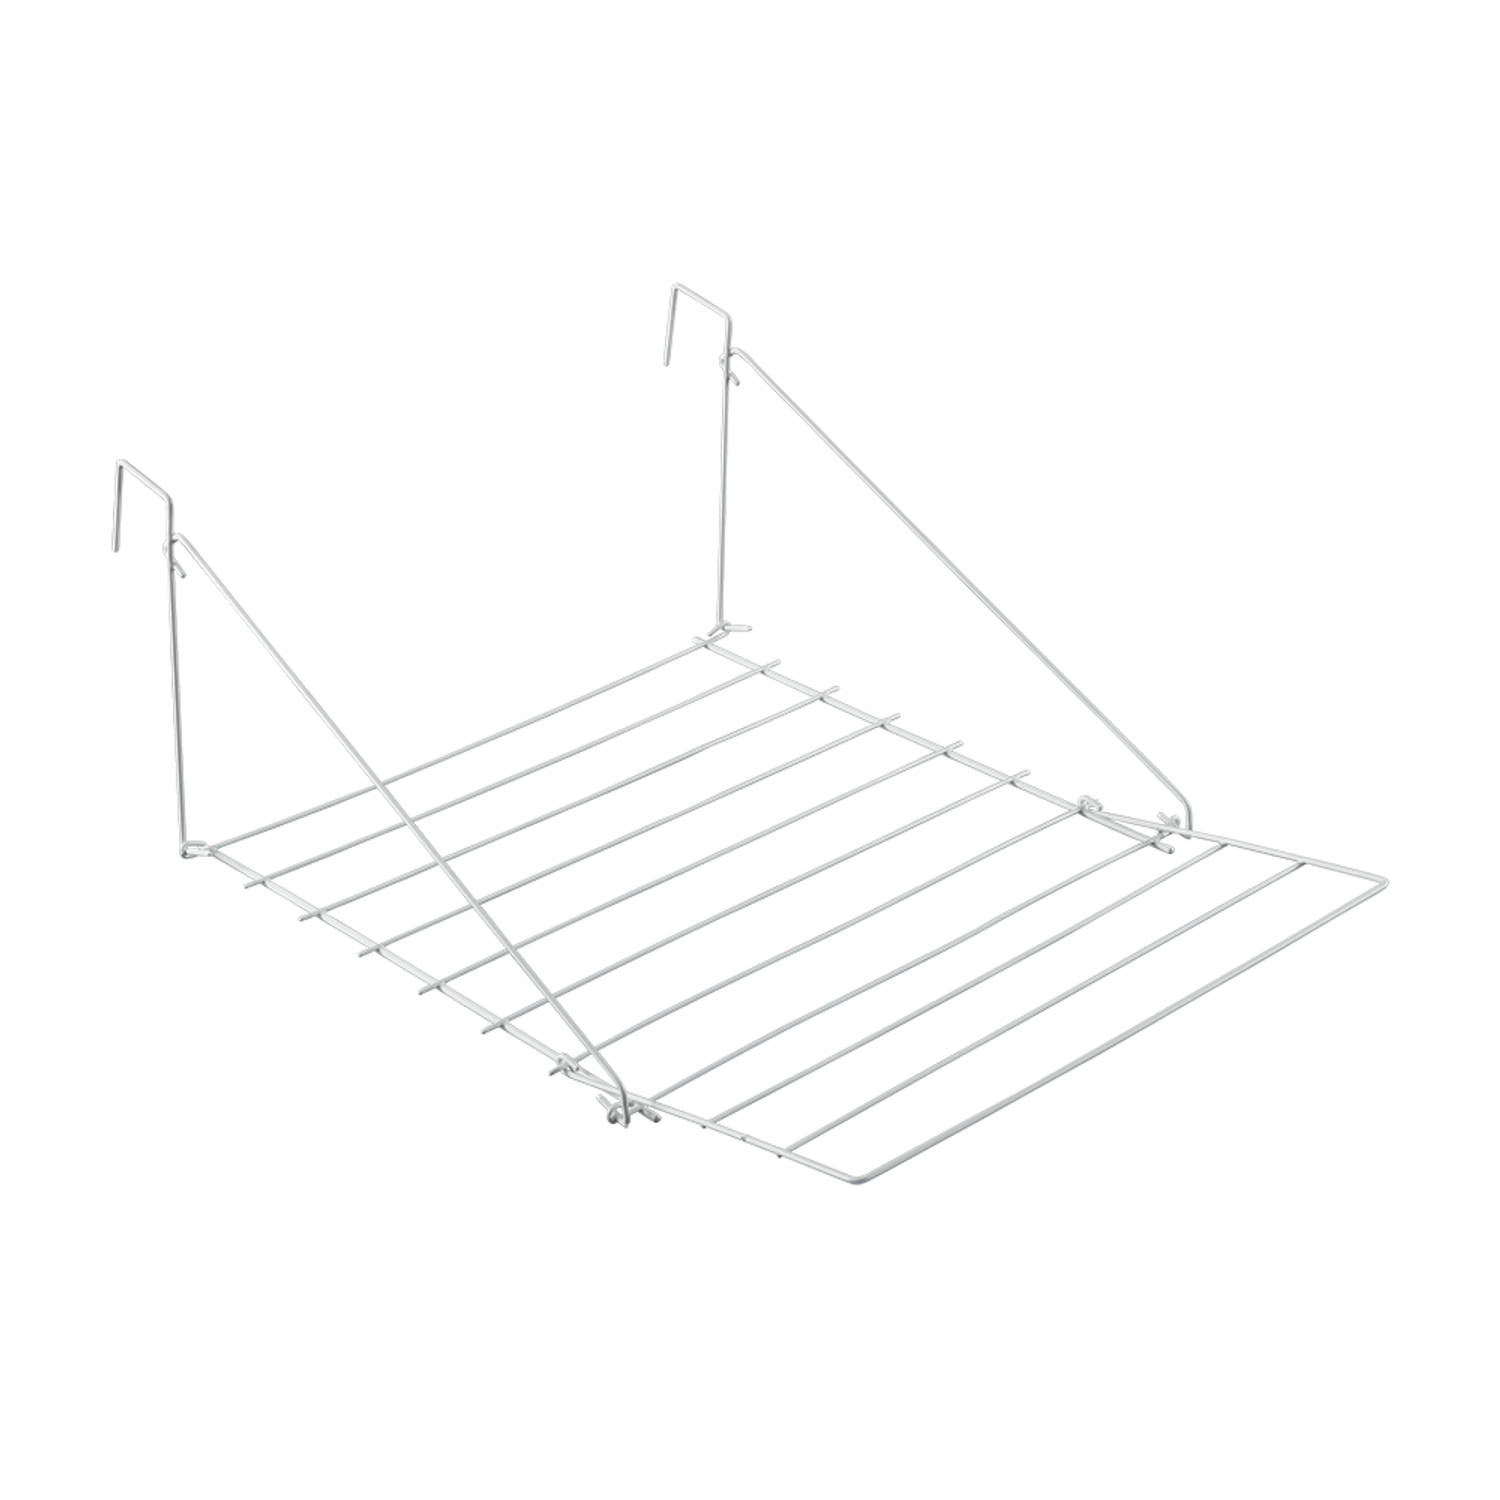 driehoek berekenen Ten einde raad Tomado Breda hangdroogrek - 7 meter drooglengte | Blokker